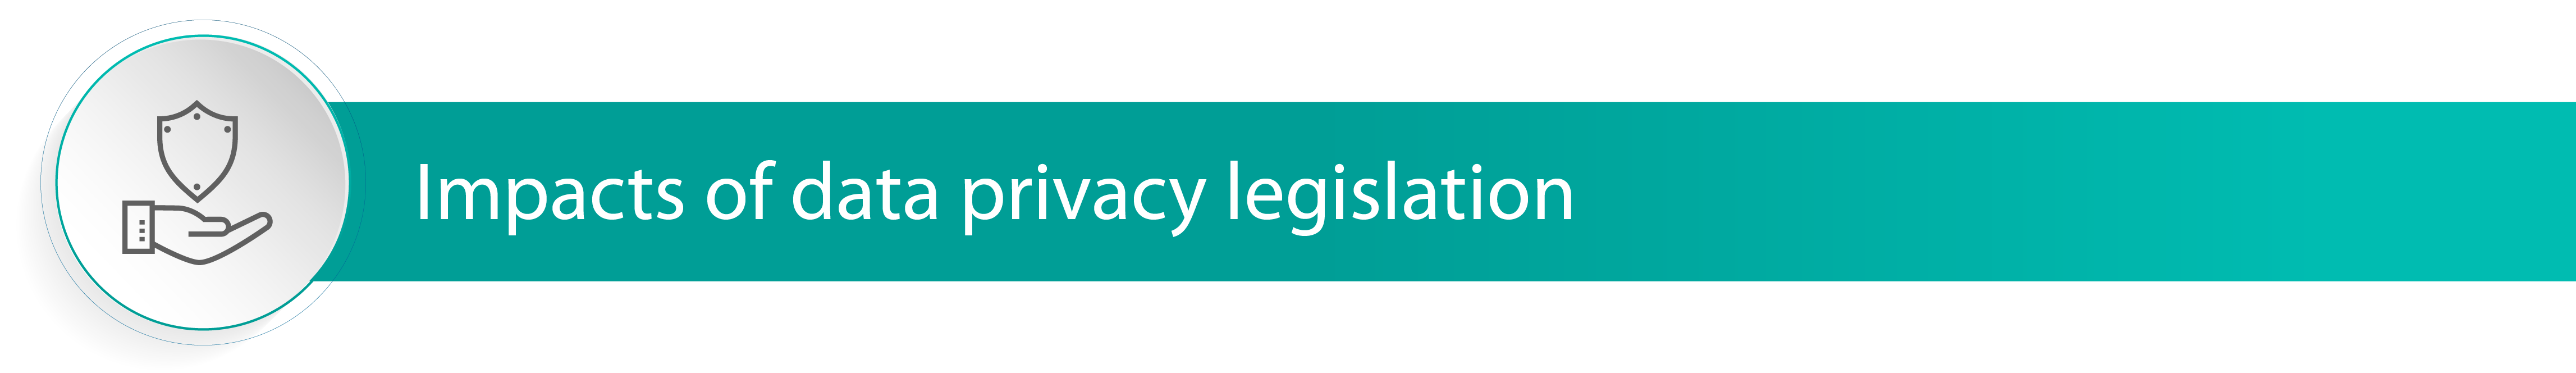 Impacts of data privacy legislation